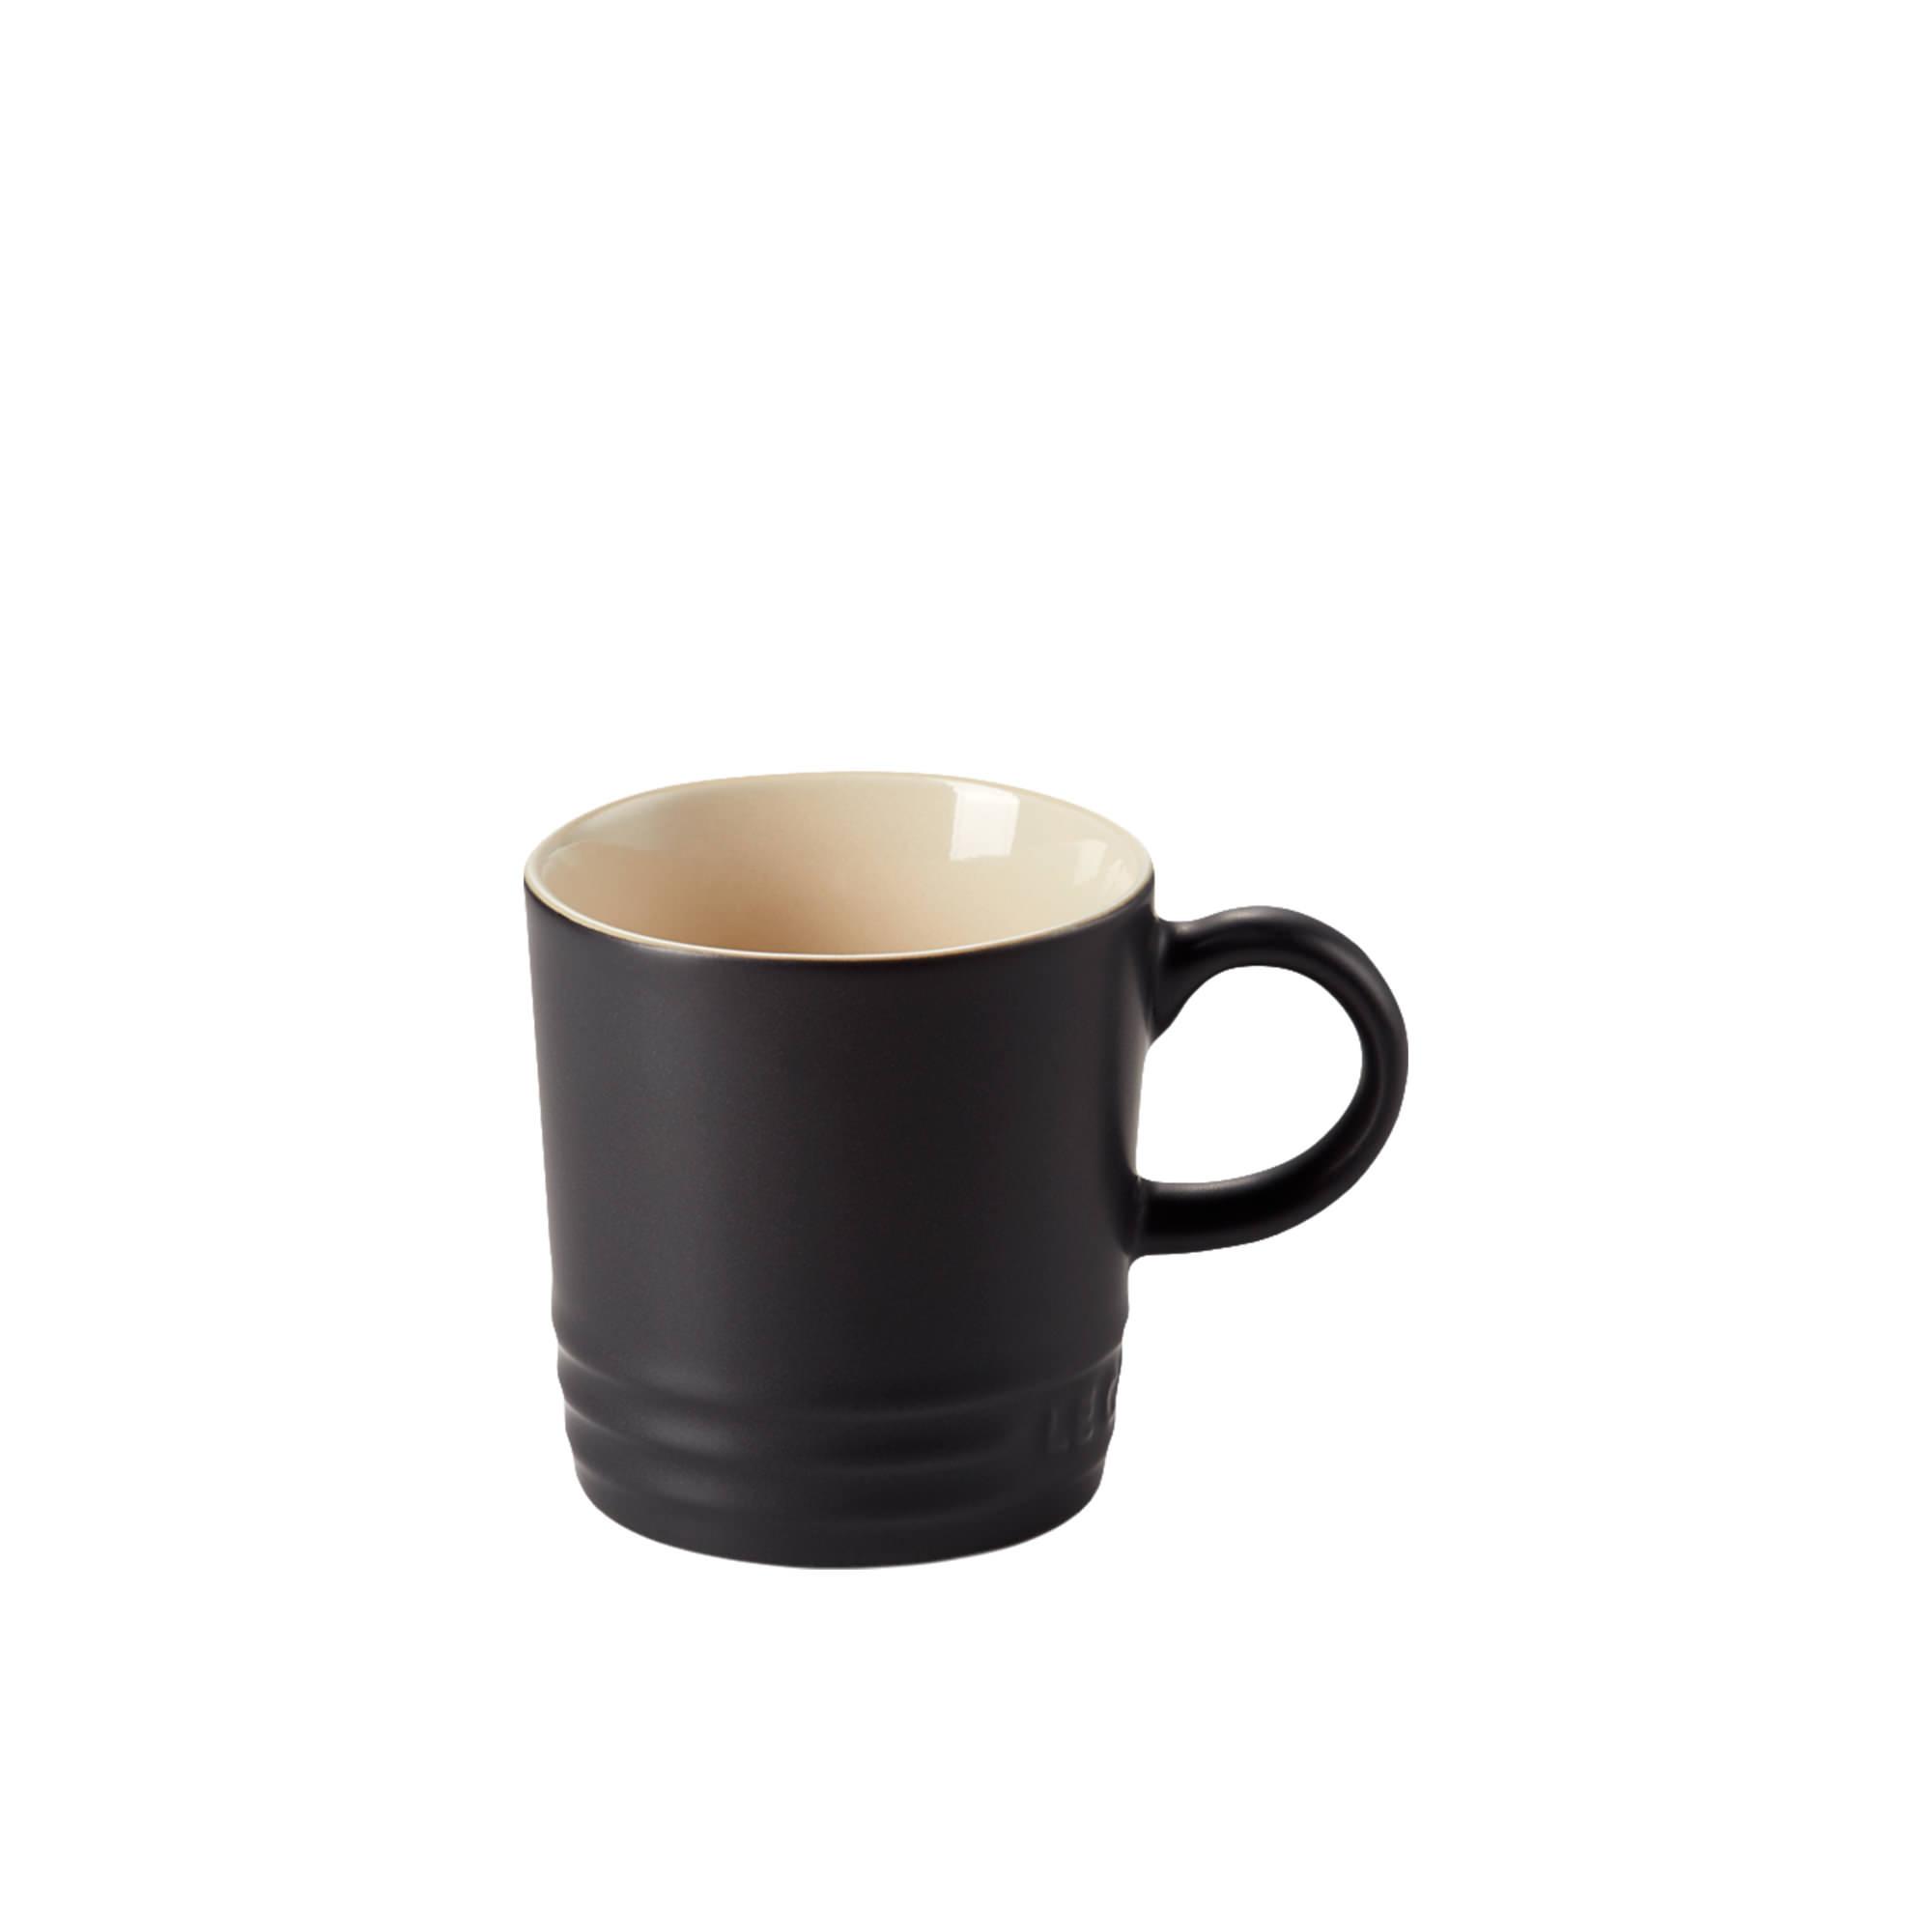 Le Creuset Stoneware Espresso Mug 100ml Satin Black Image 1